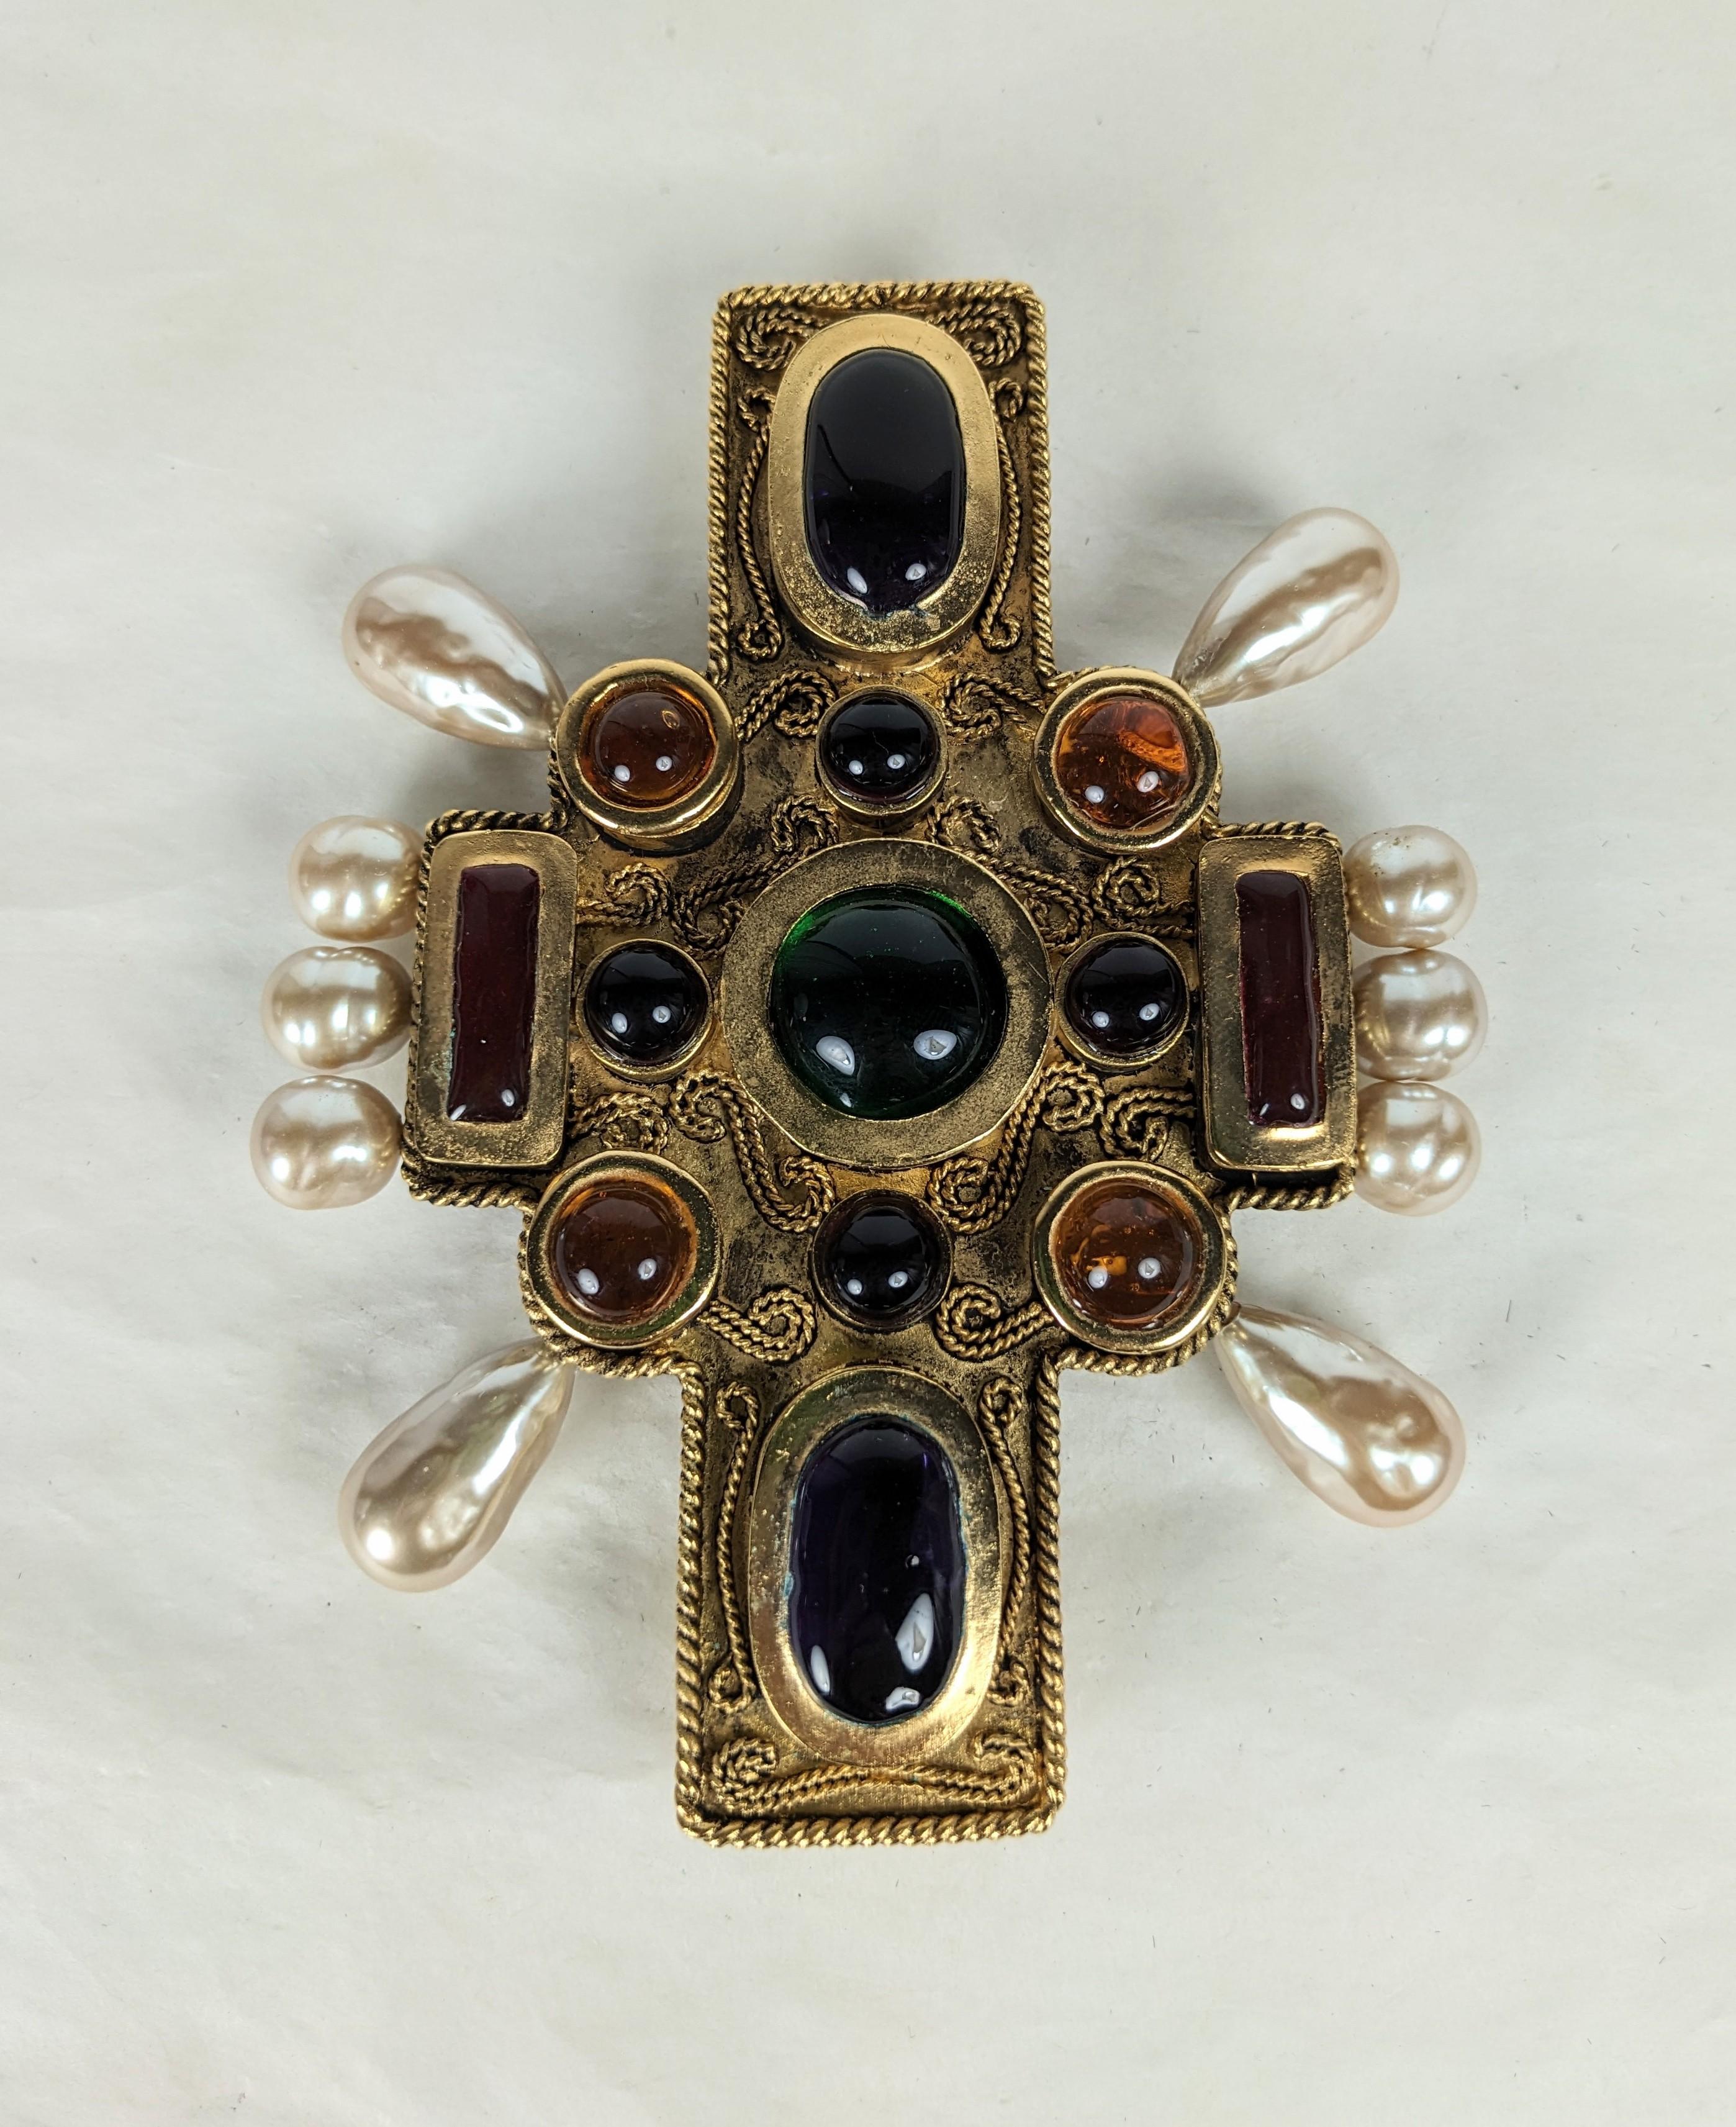 Chanel Massive Byzantine Cross Pendant Brooch by Maison Gripoix For Sale 1